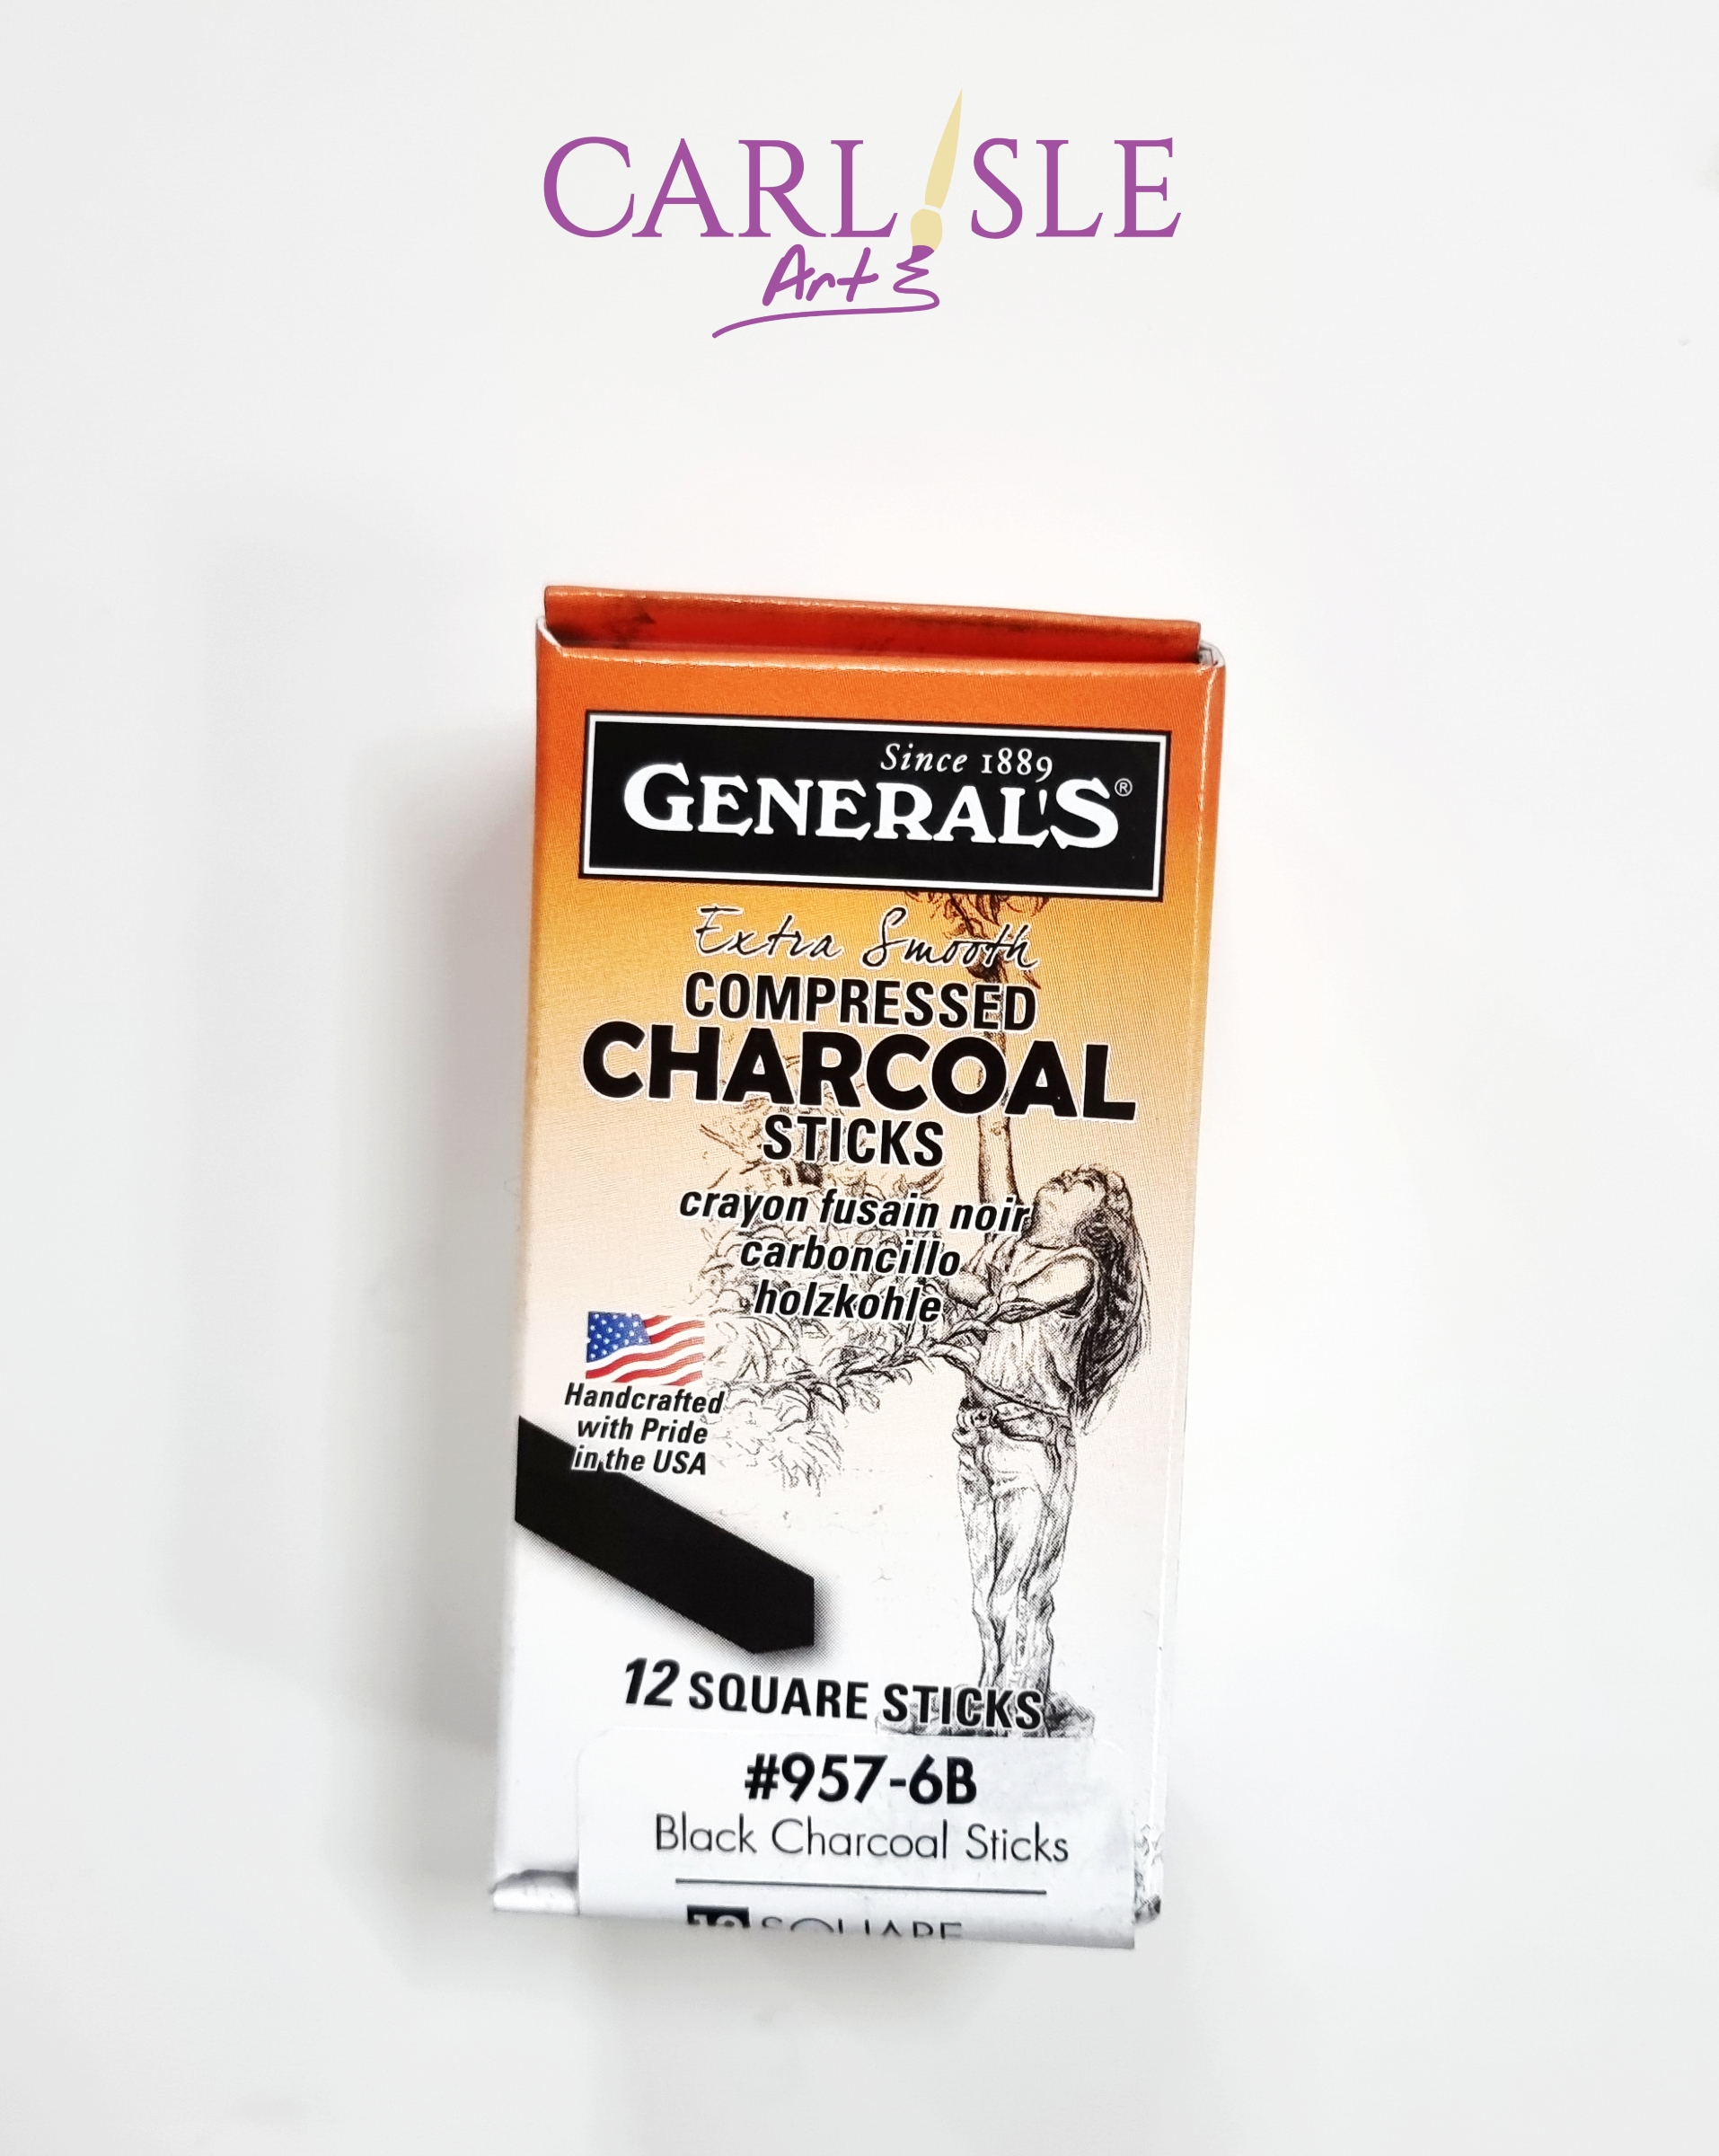 Cretacolor Compressed Charcoal Medium Sticks, Box of 12